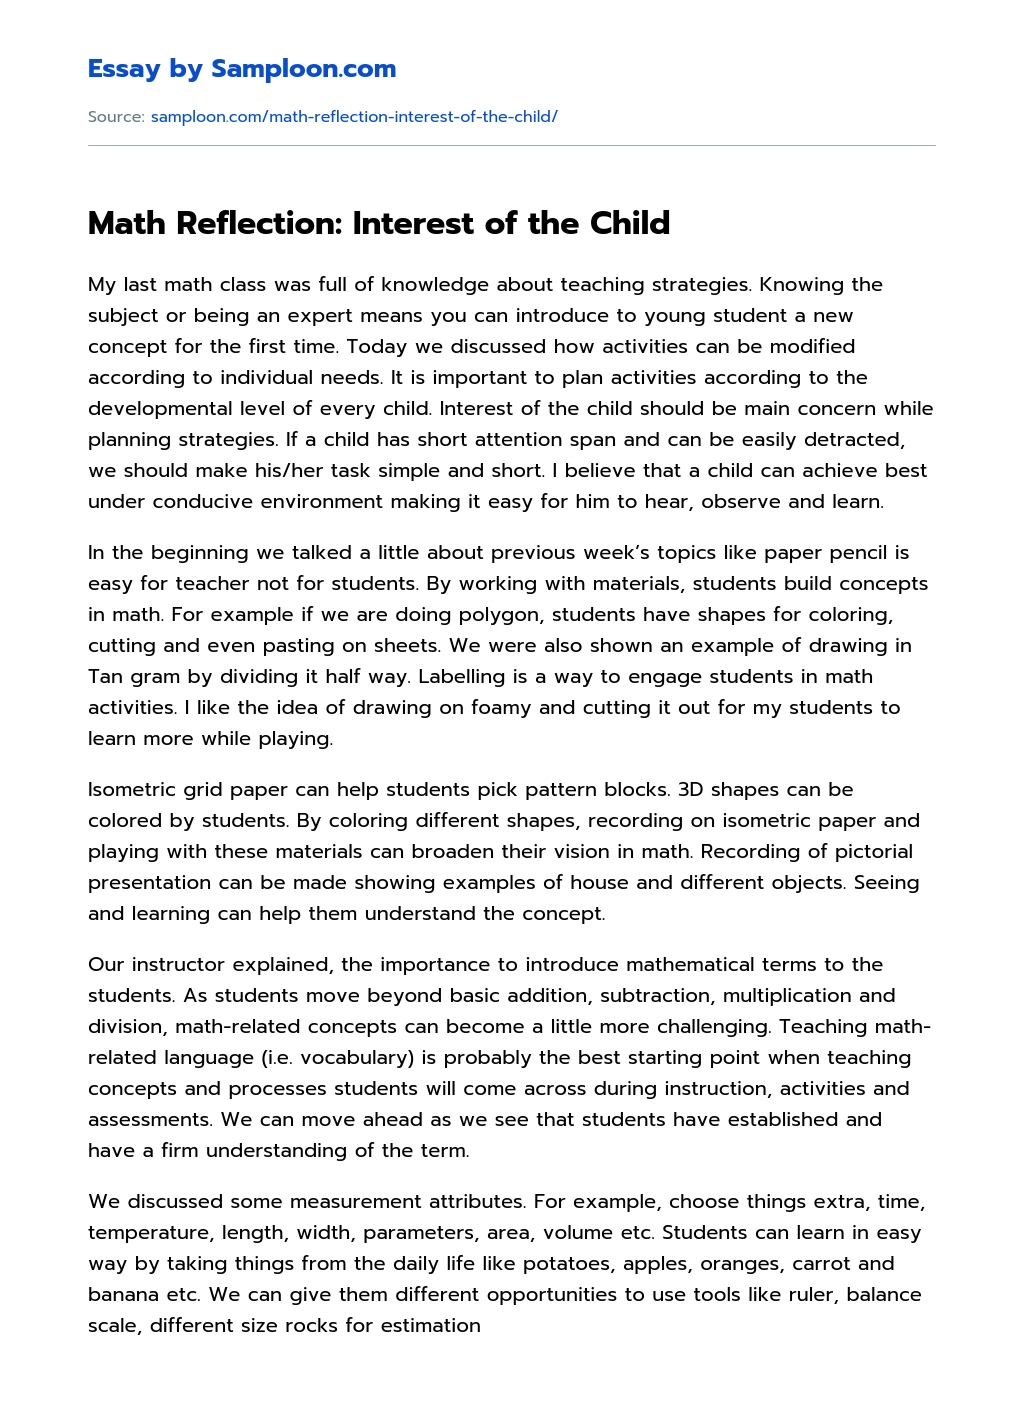 Math Reflection: Interest of the Child essay